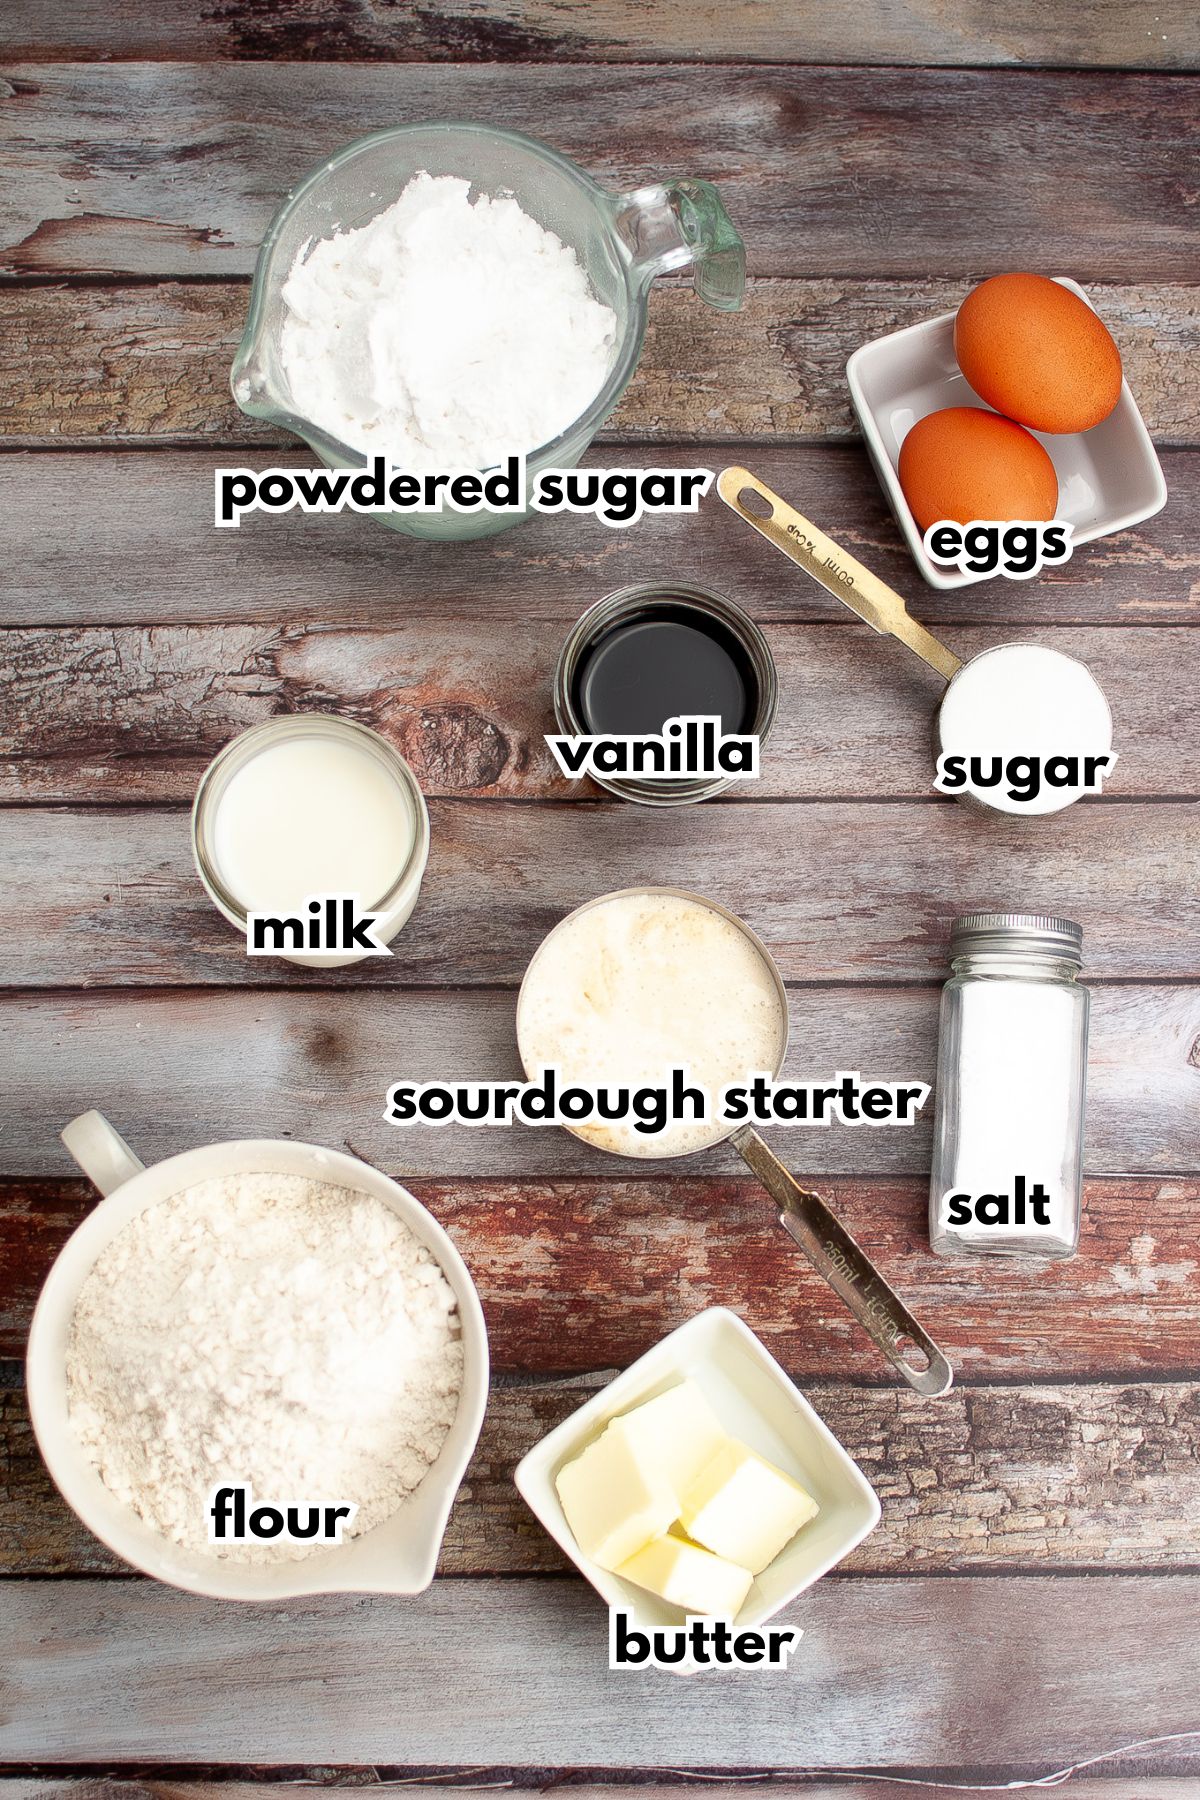 bowls of powdered sugar, eggs, vanilla, milk, sugar, sourdough starter, slat, flour, and butter.